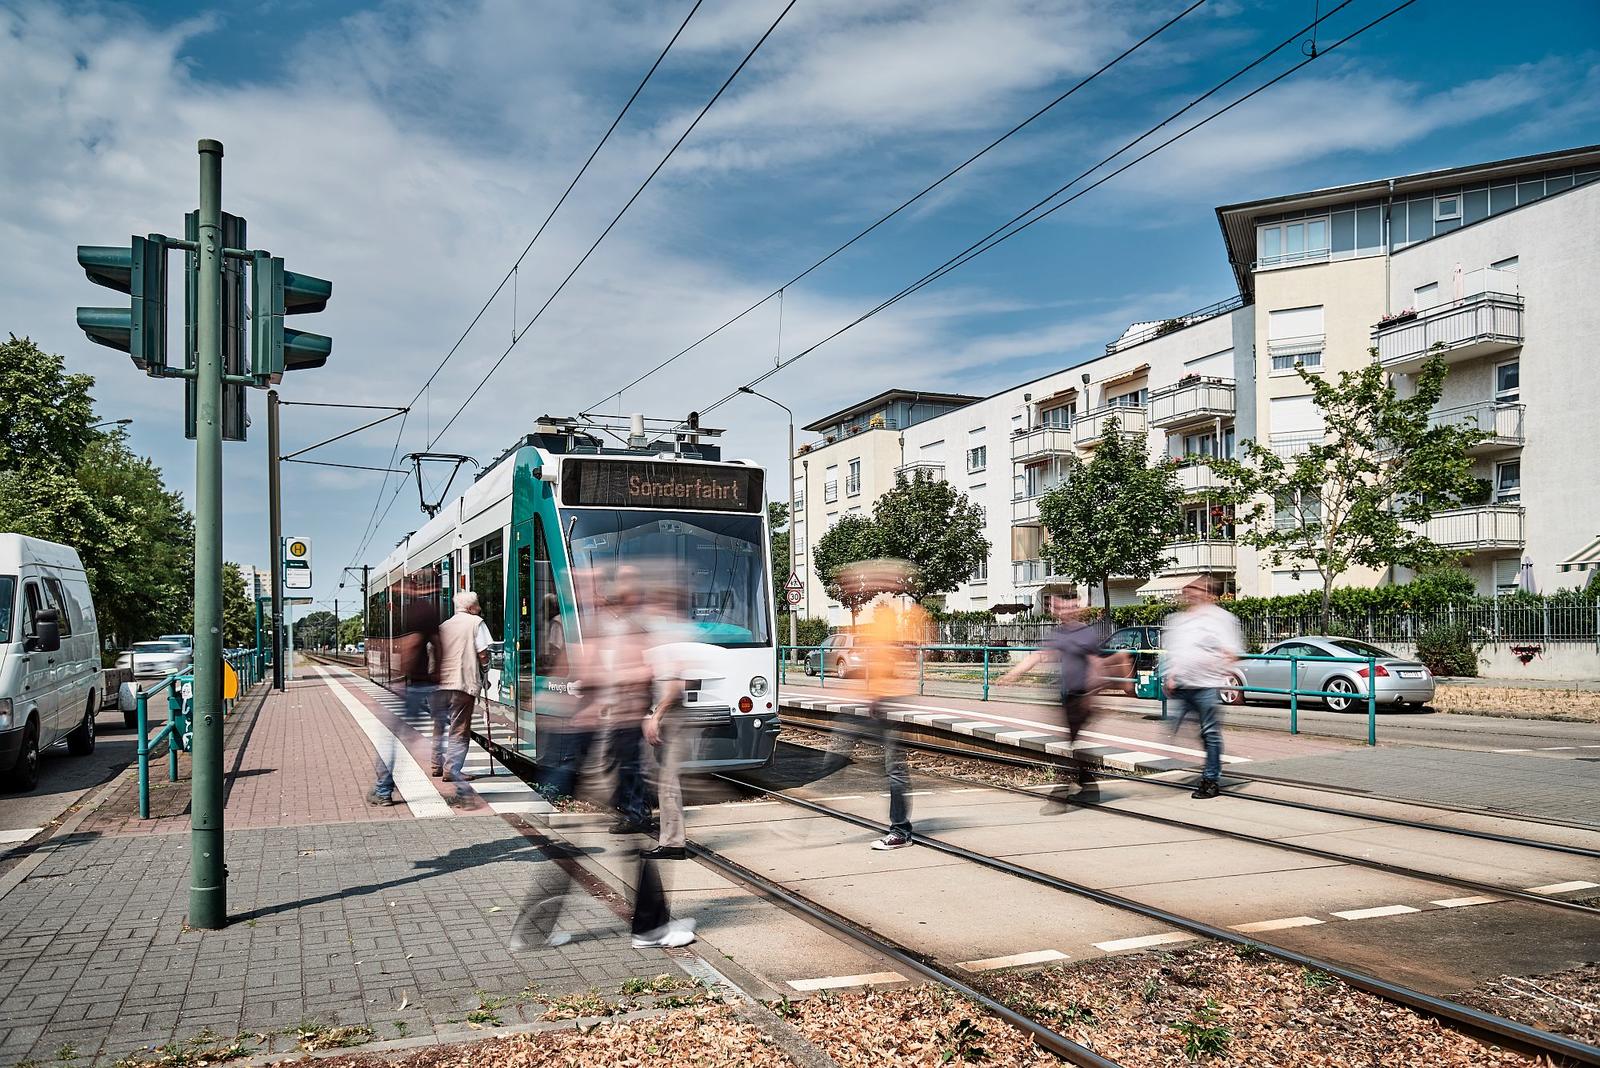 Siemens Mobility präsentiert erste autonom fahrende Straßenbahn der Welt / Siemens Mobility presents world’s first autonomous tram